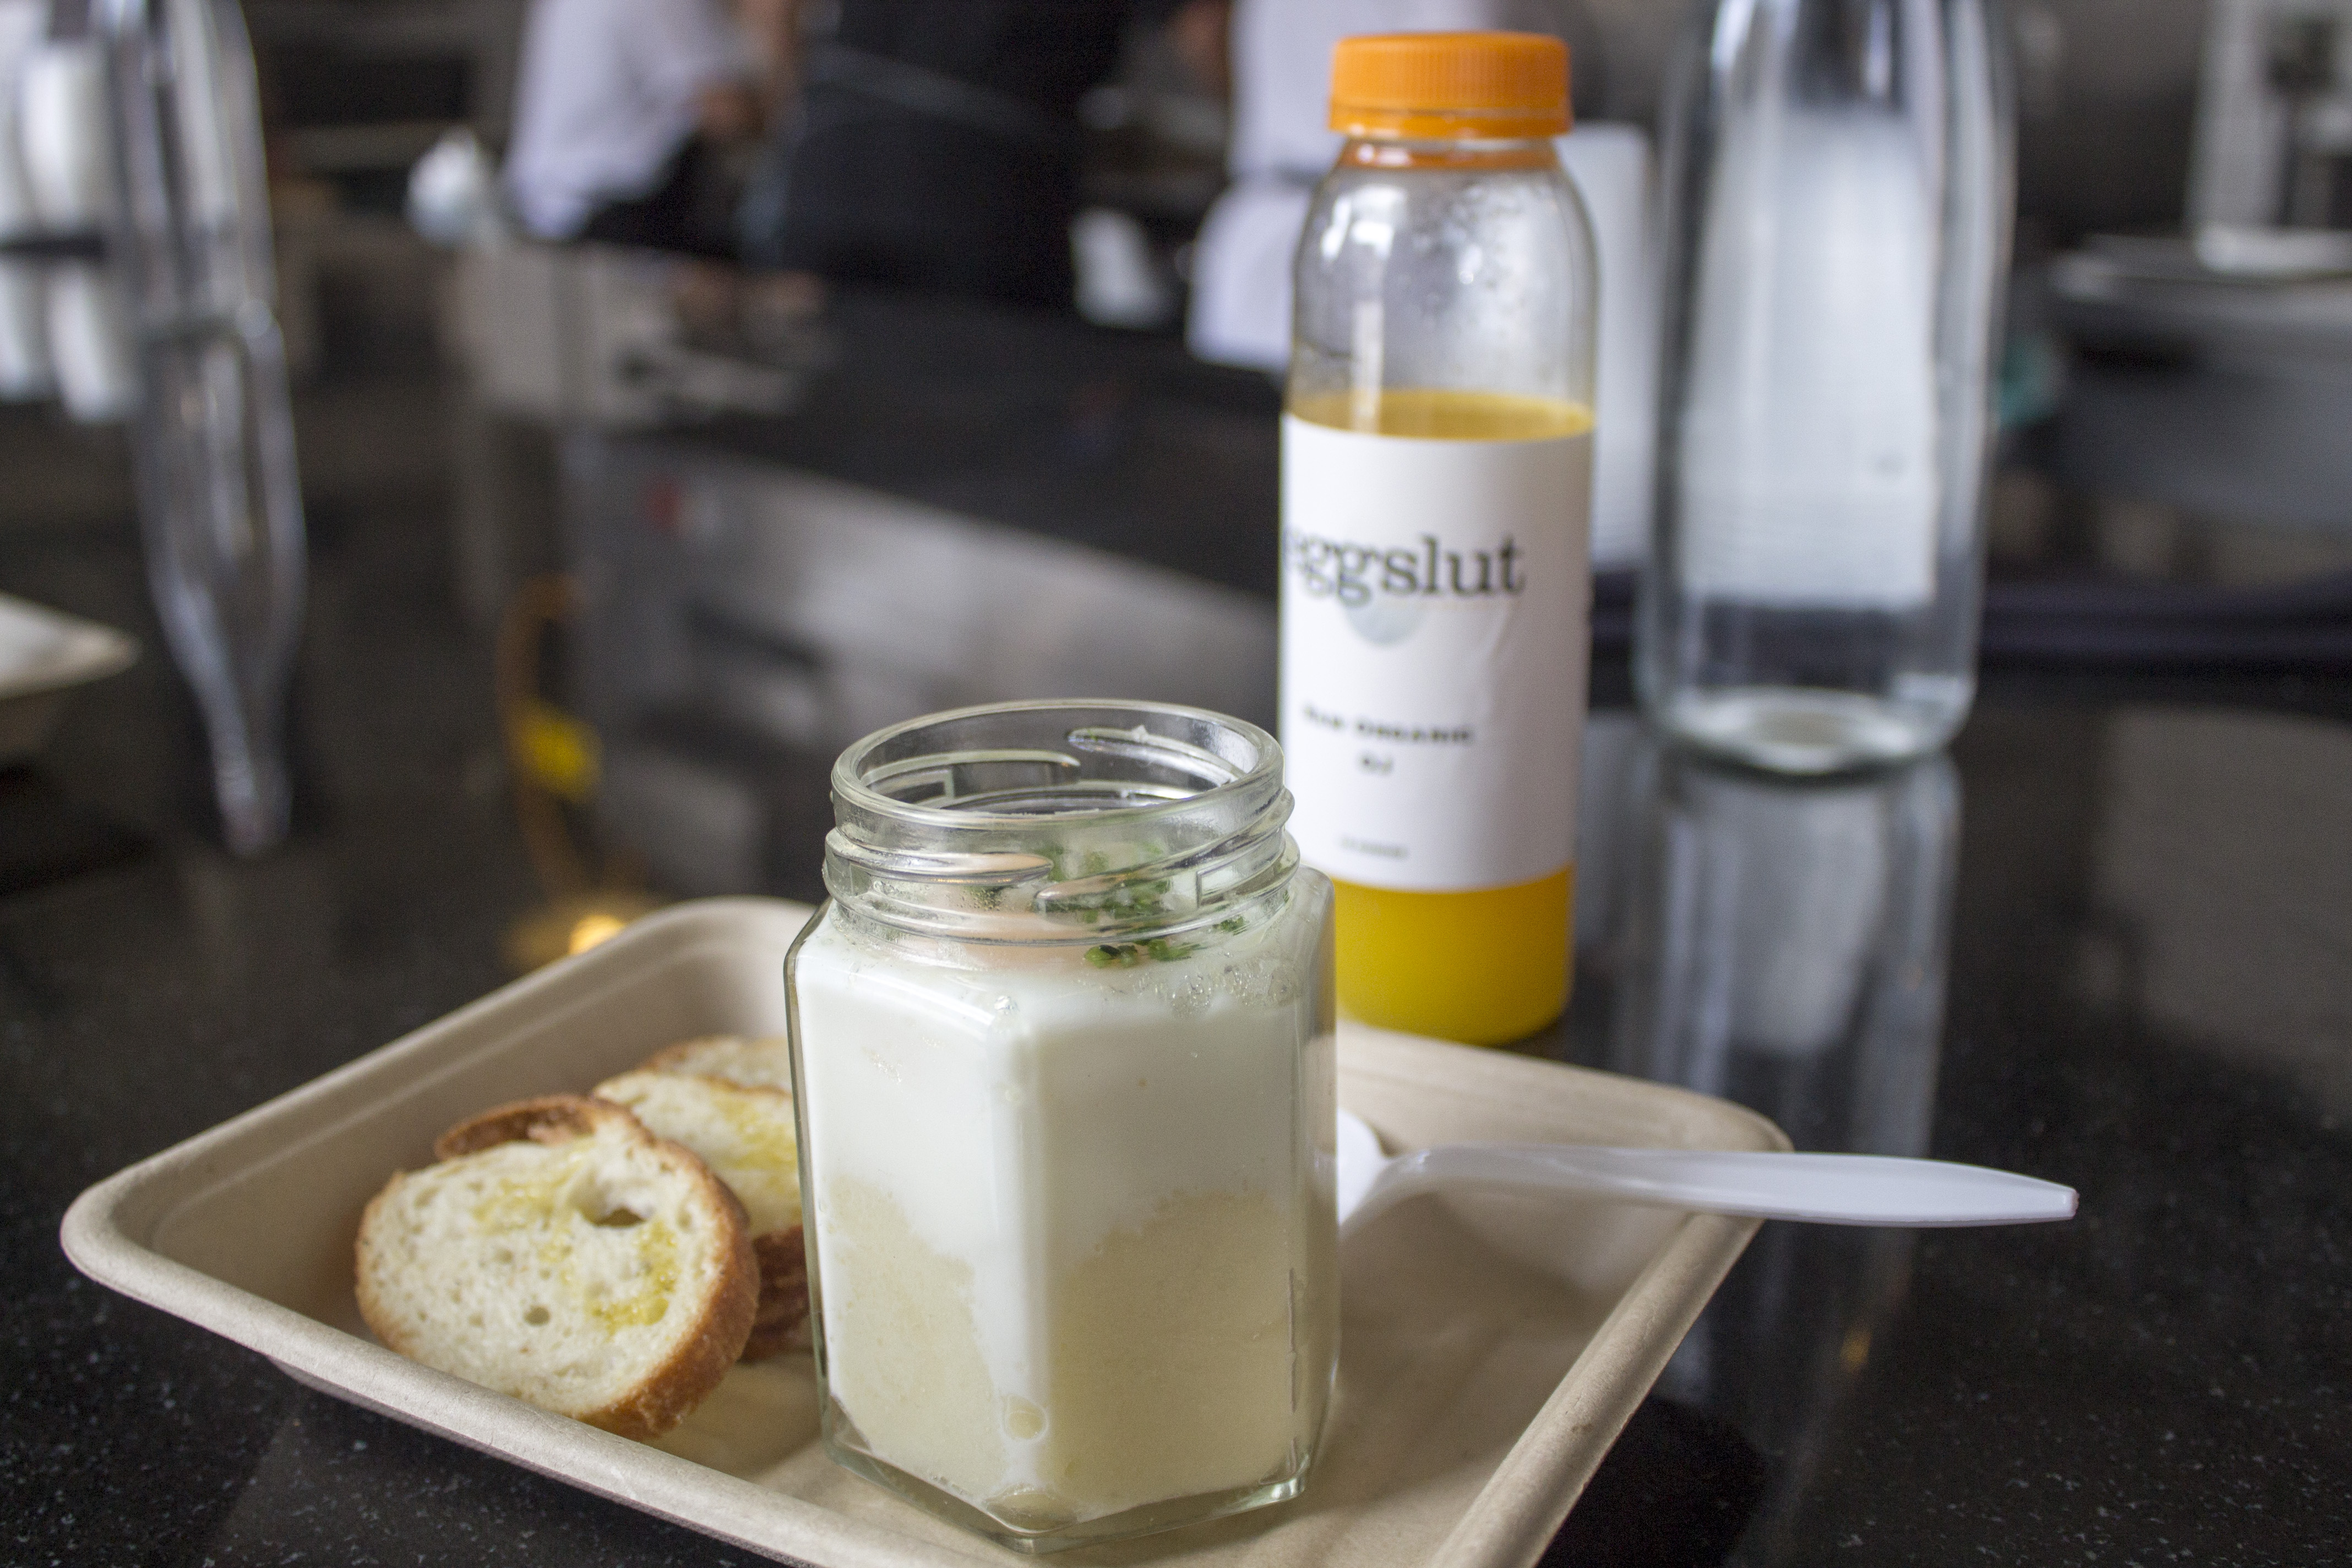 Eggslut- The Perfect Breakfast in LA